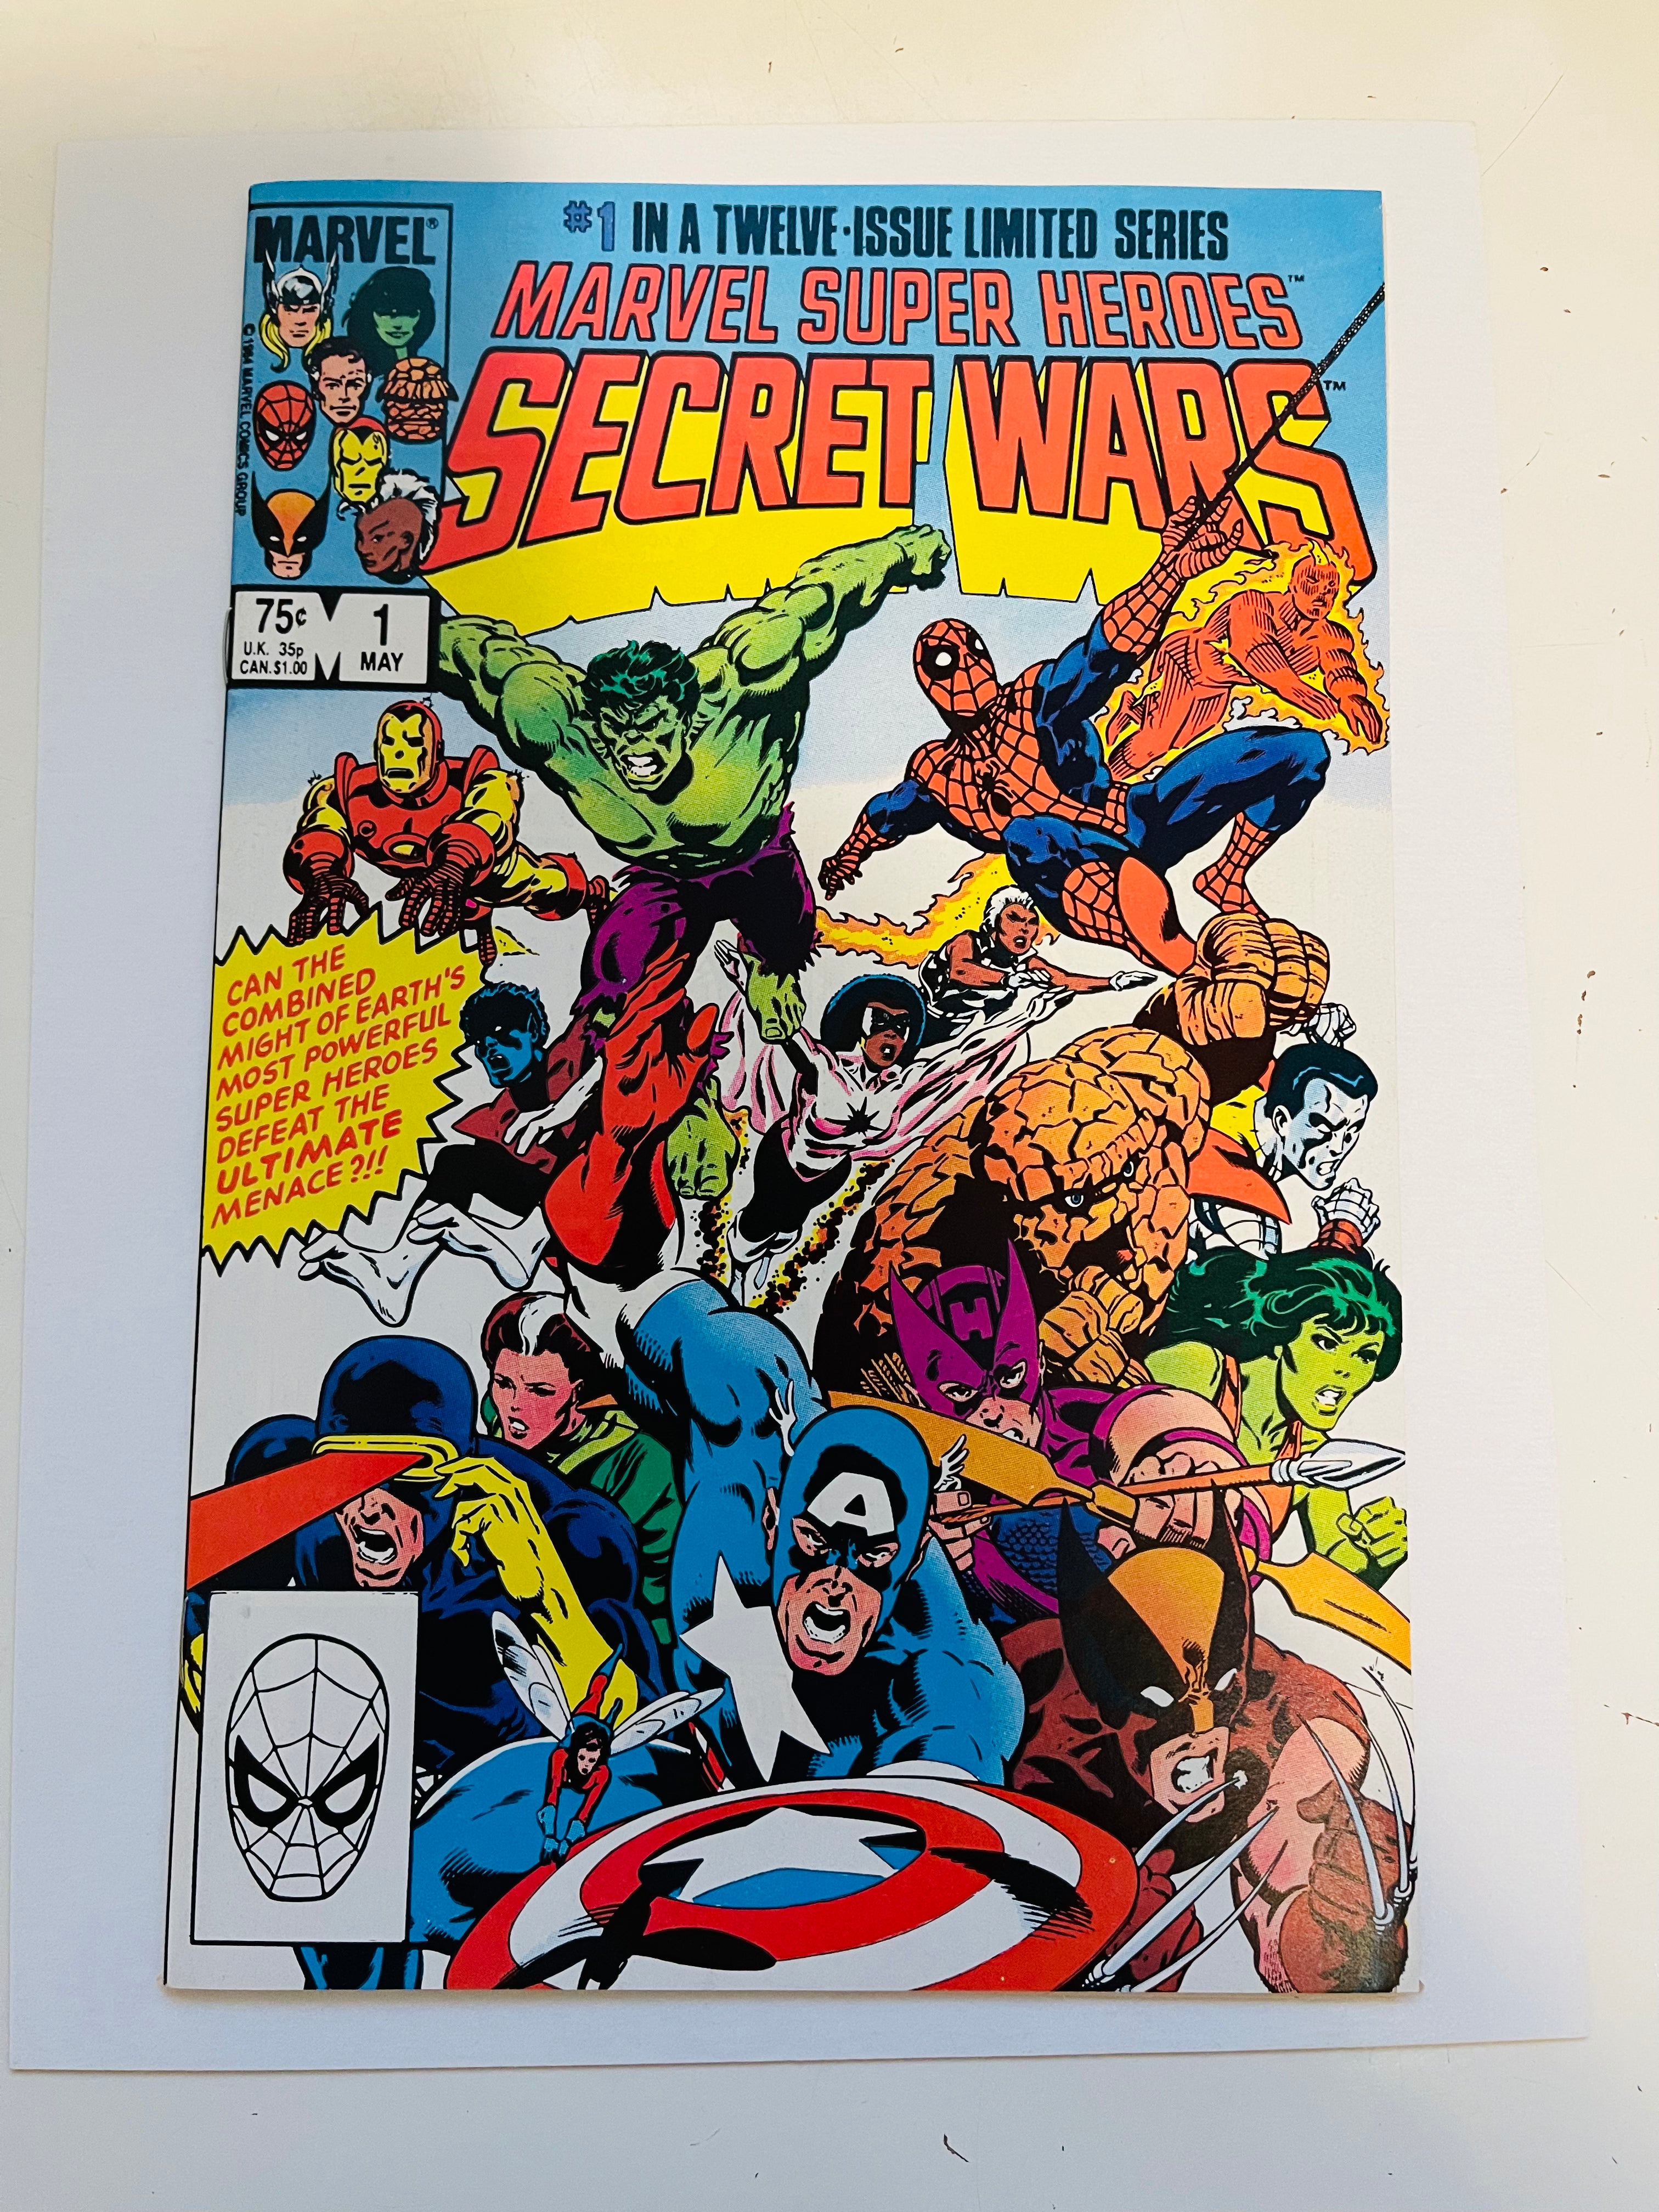 Marvel Superheroes Secret Wars high grade #1 comic book